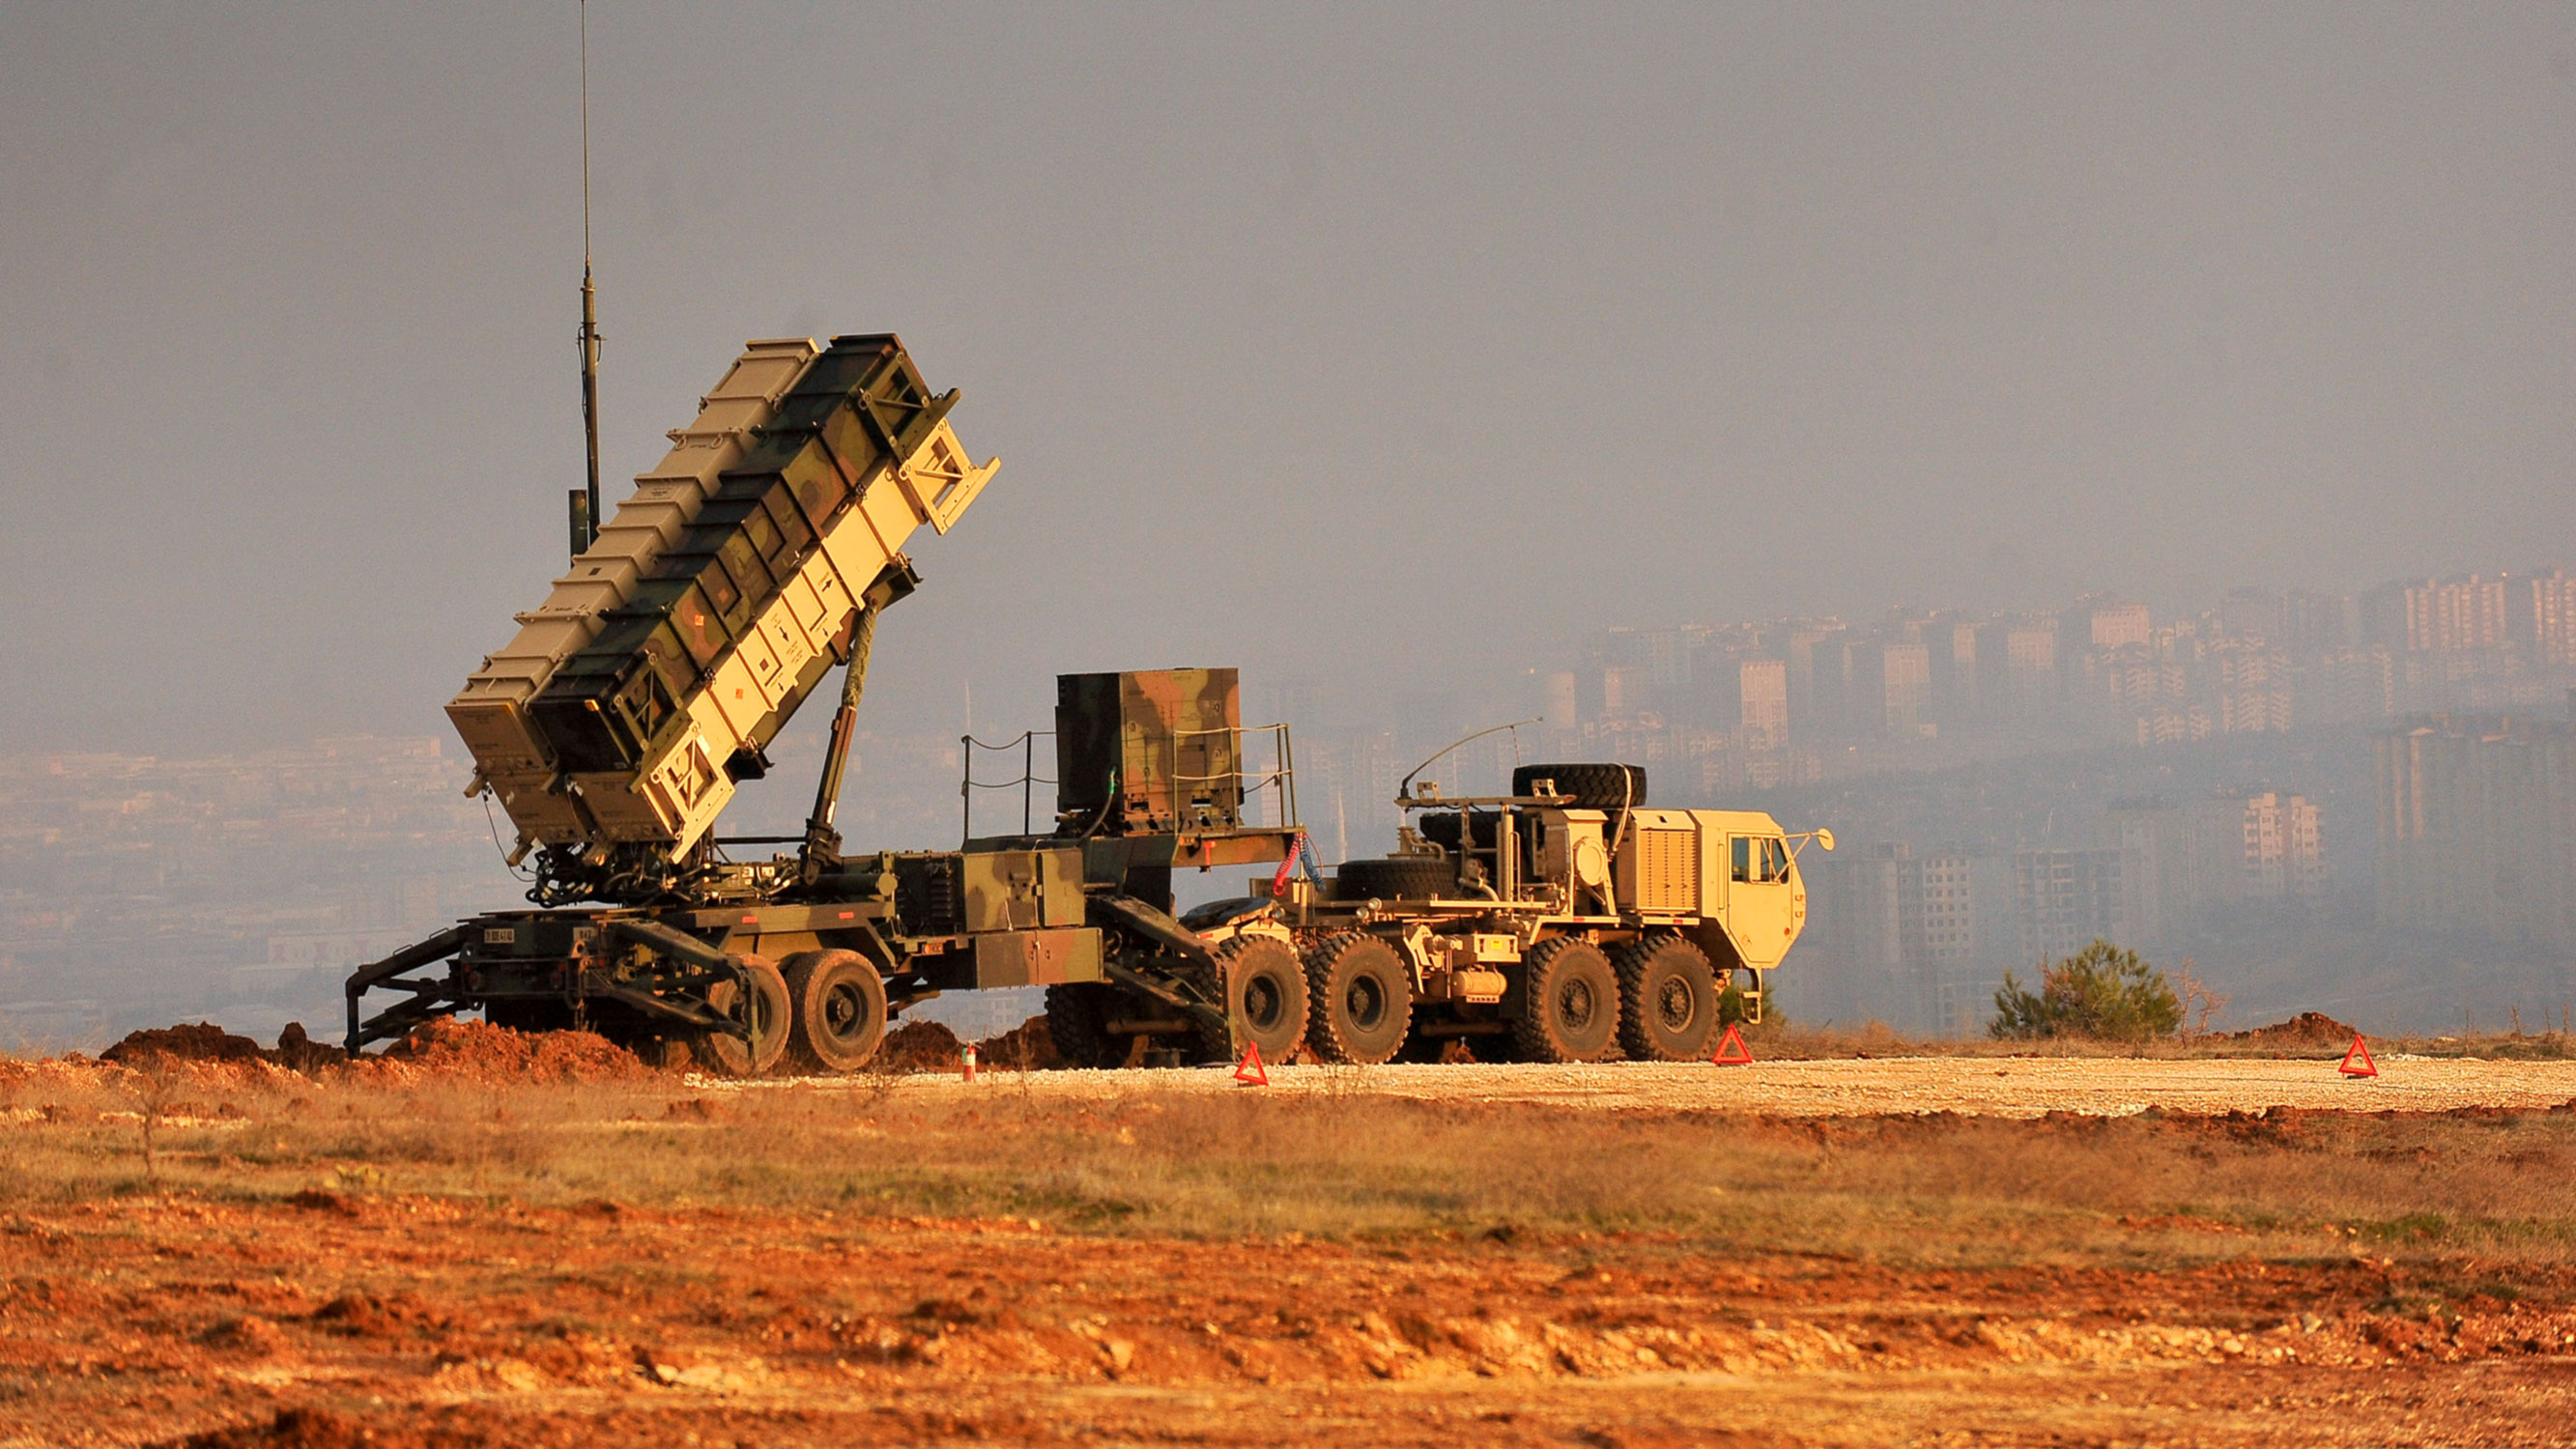 Patriot missiles deployed in Turkey